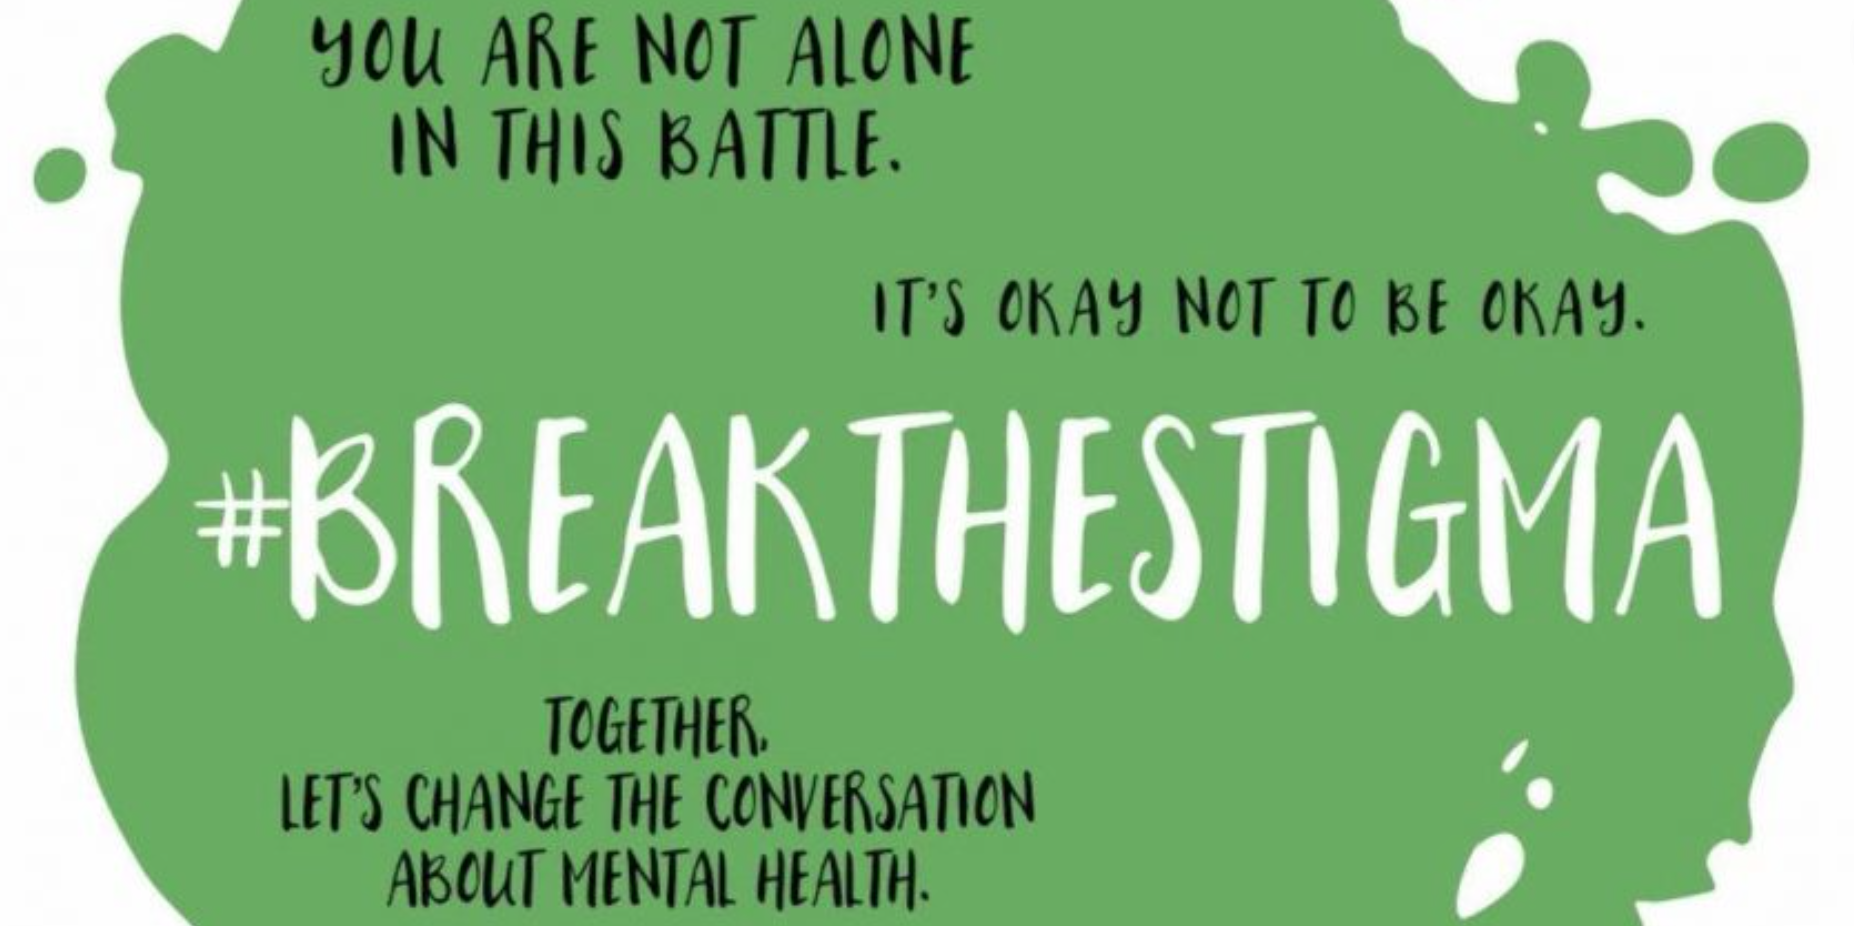 Mental illness awareness week infographic. #breakthestigma